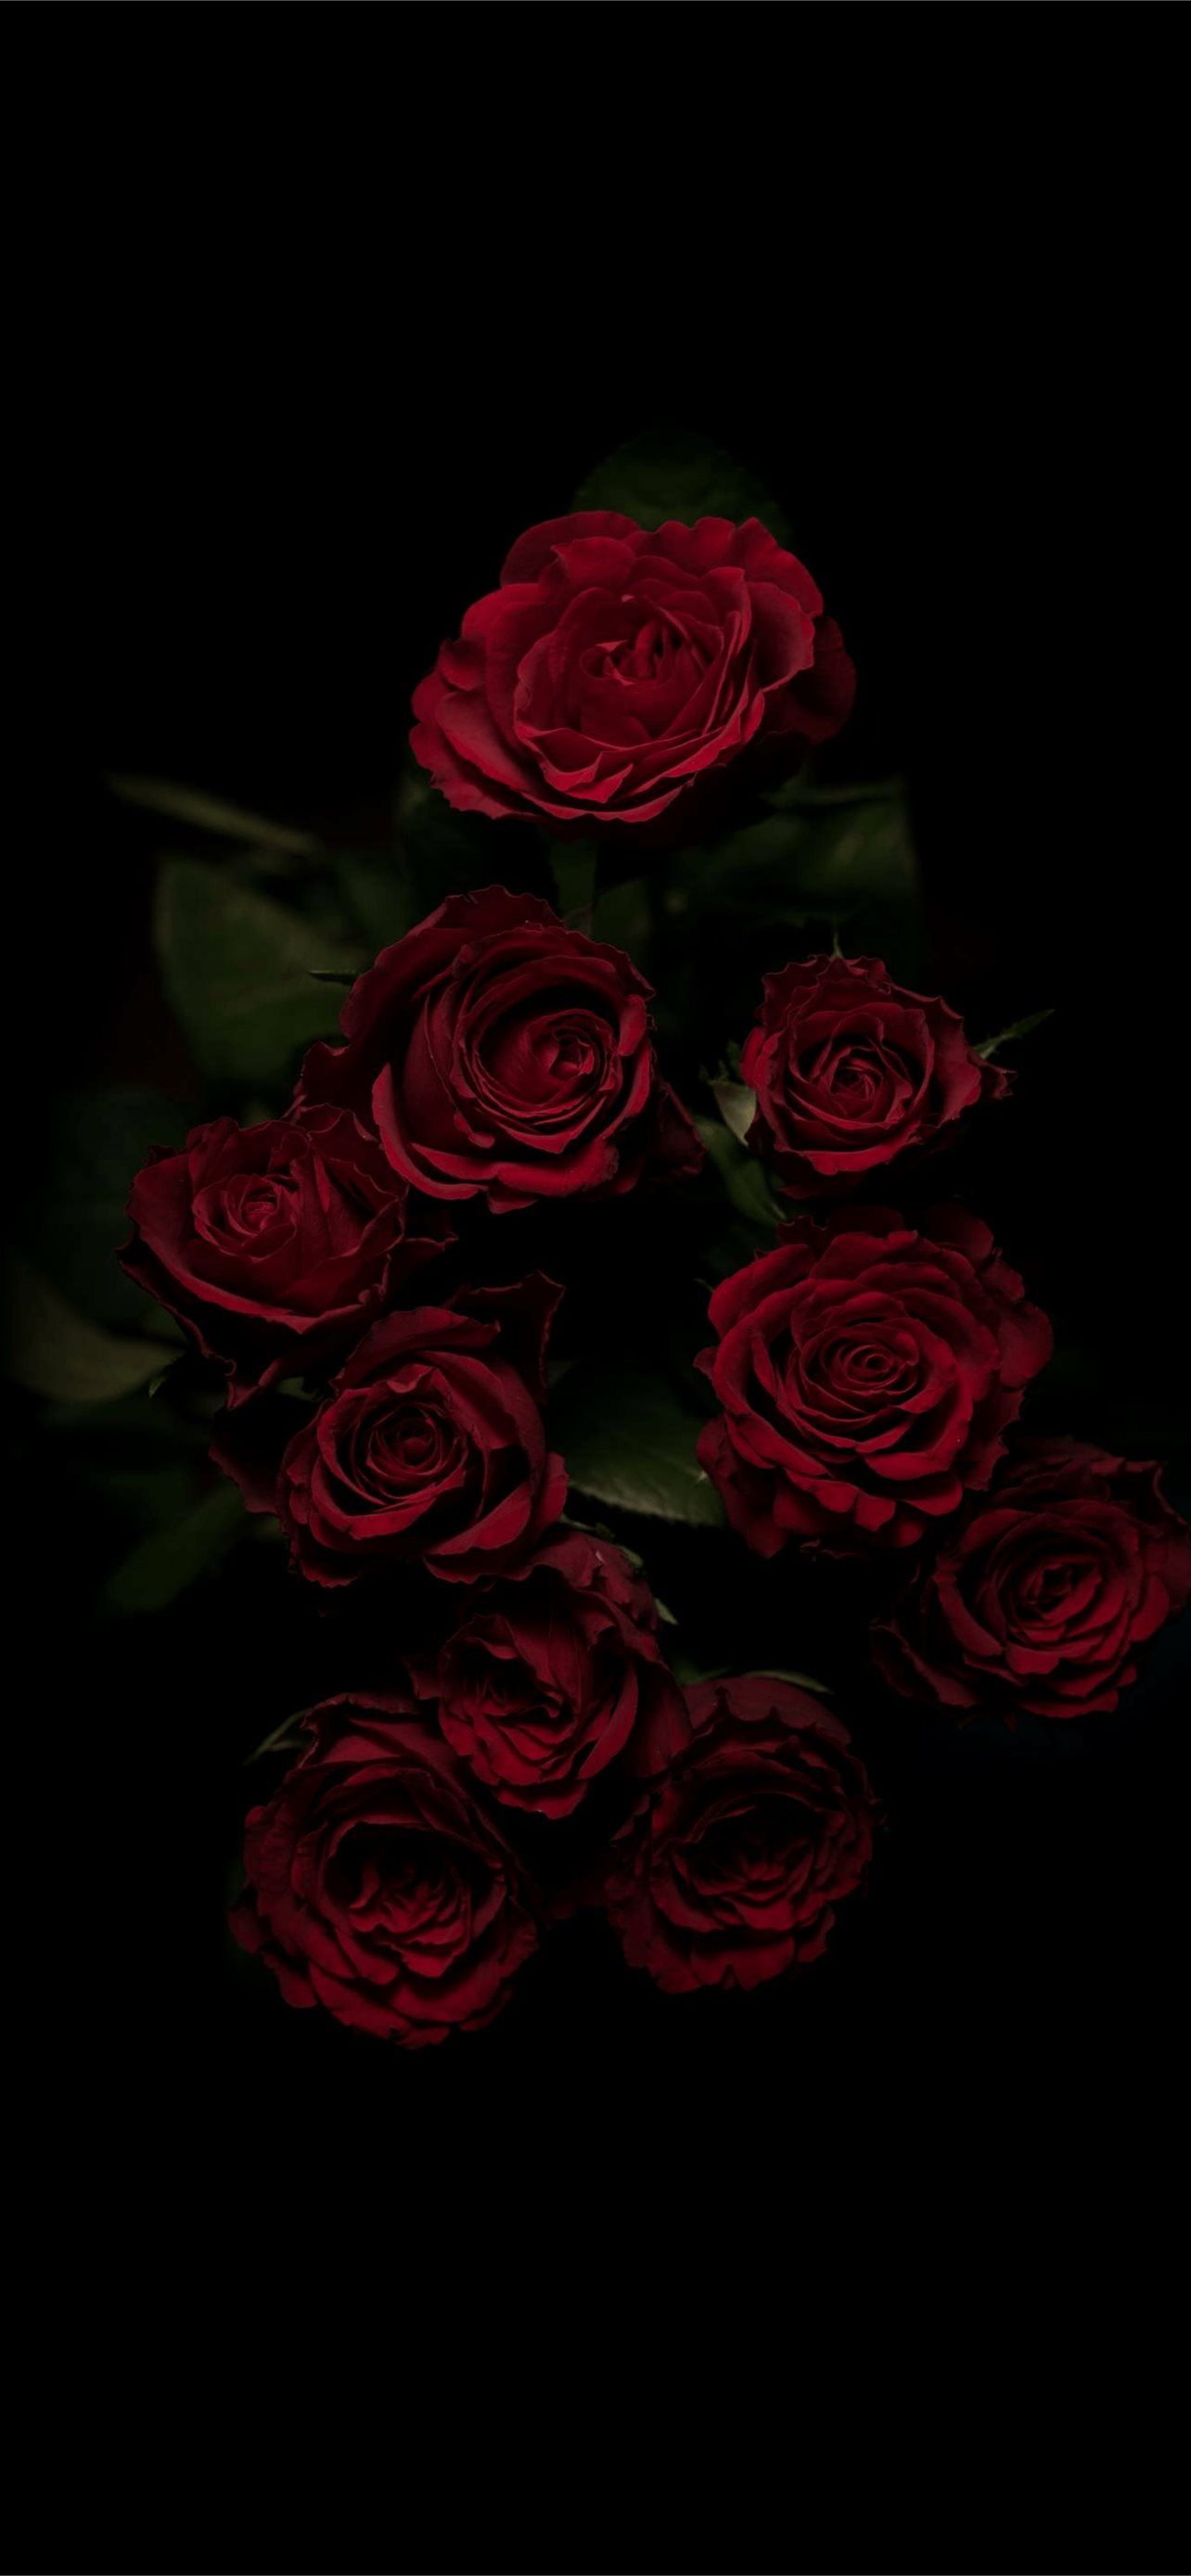 roses iPhone Wallpaper Free Download